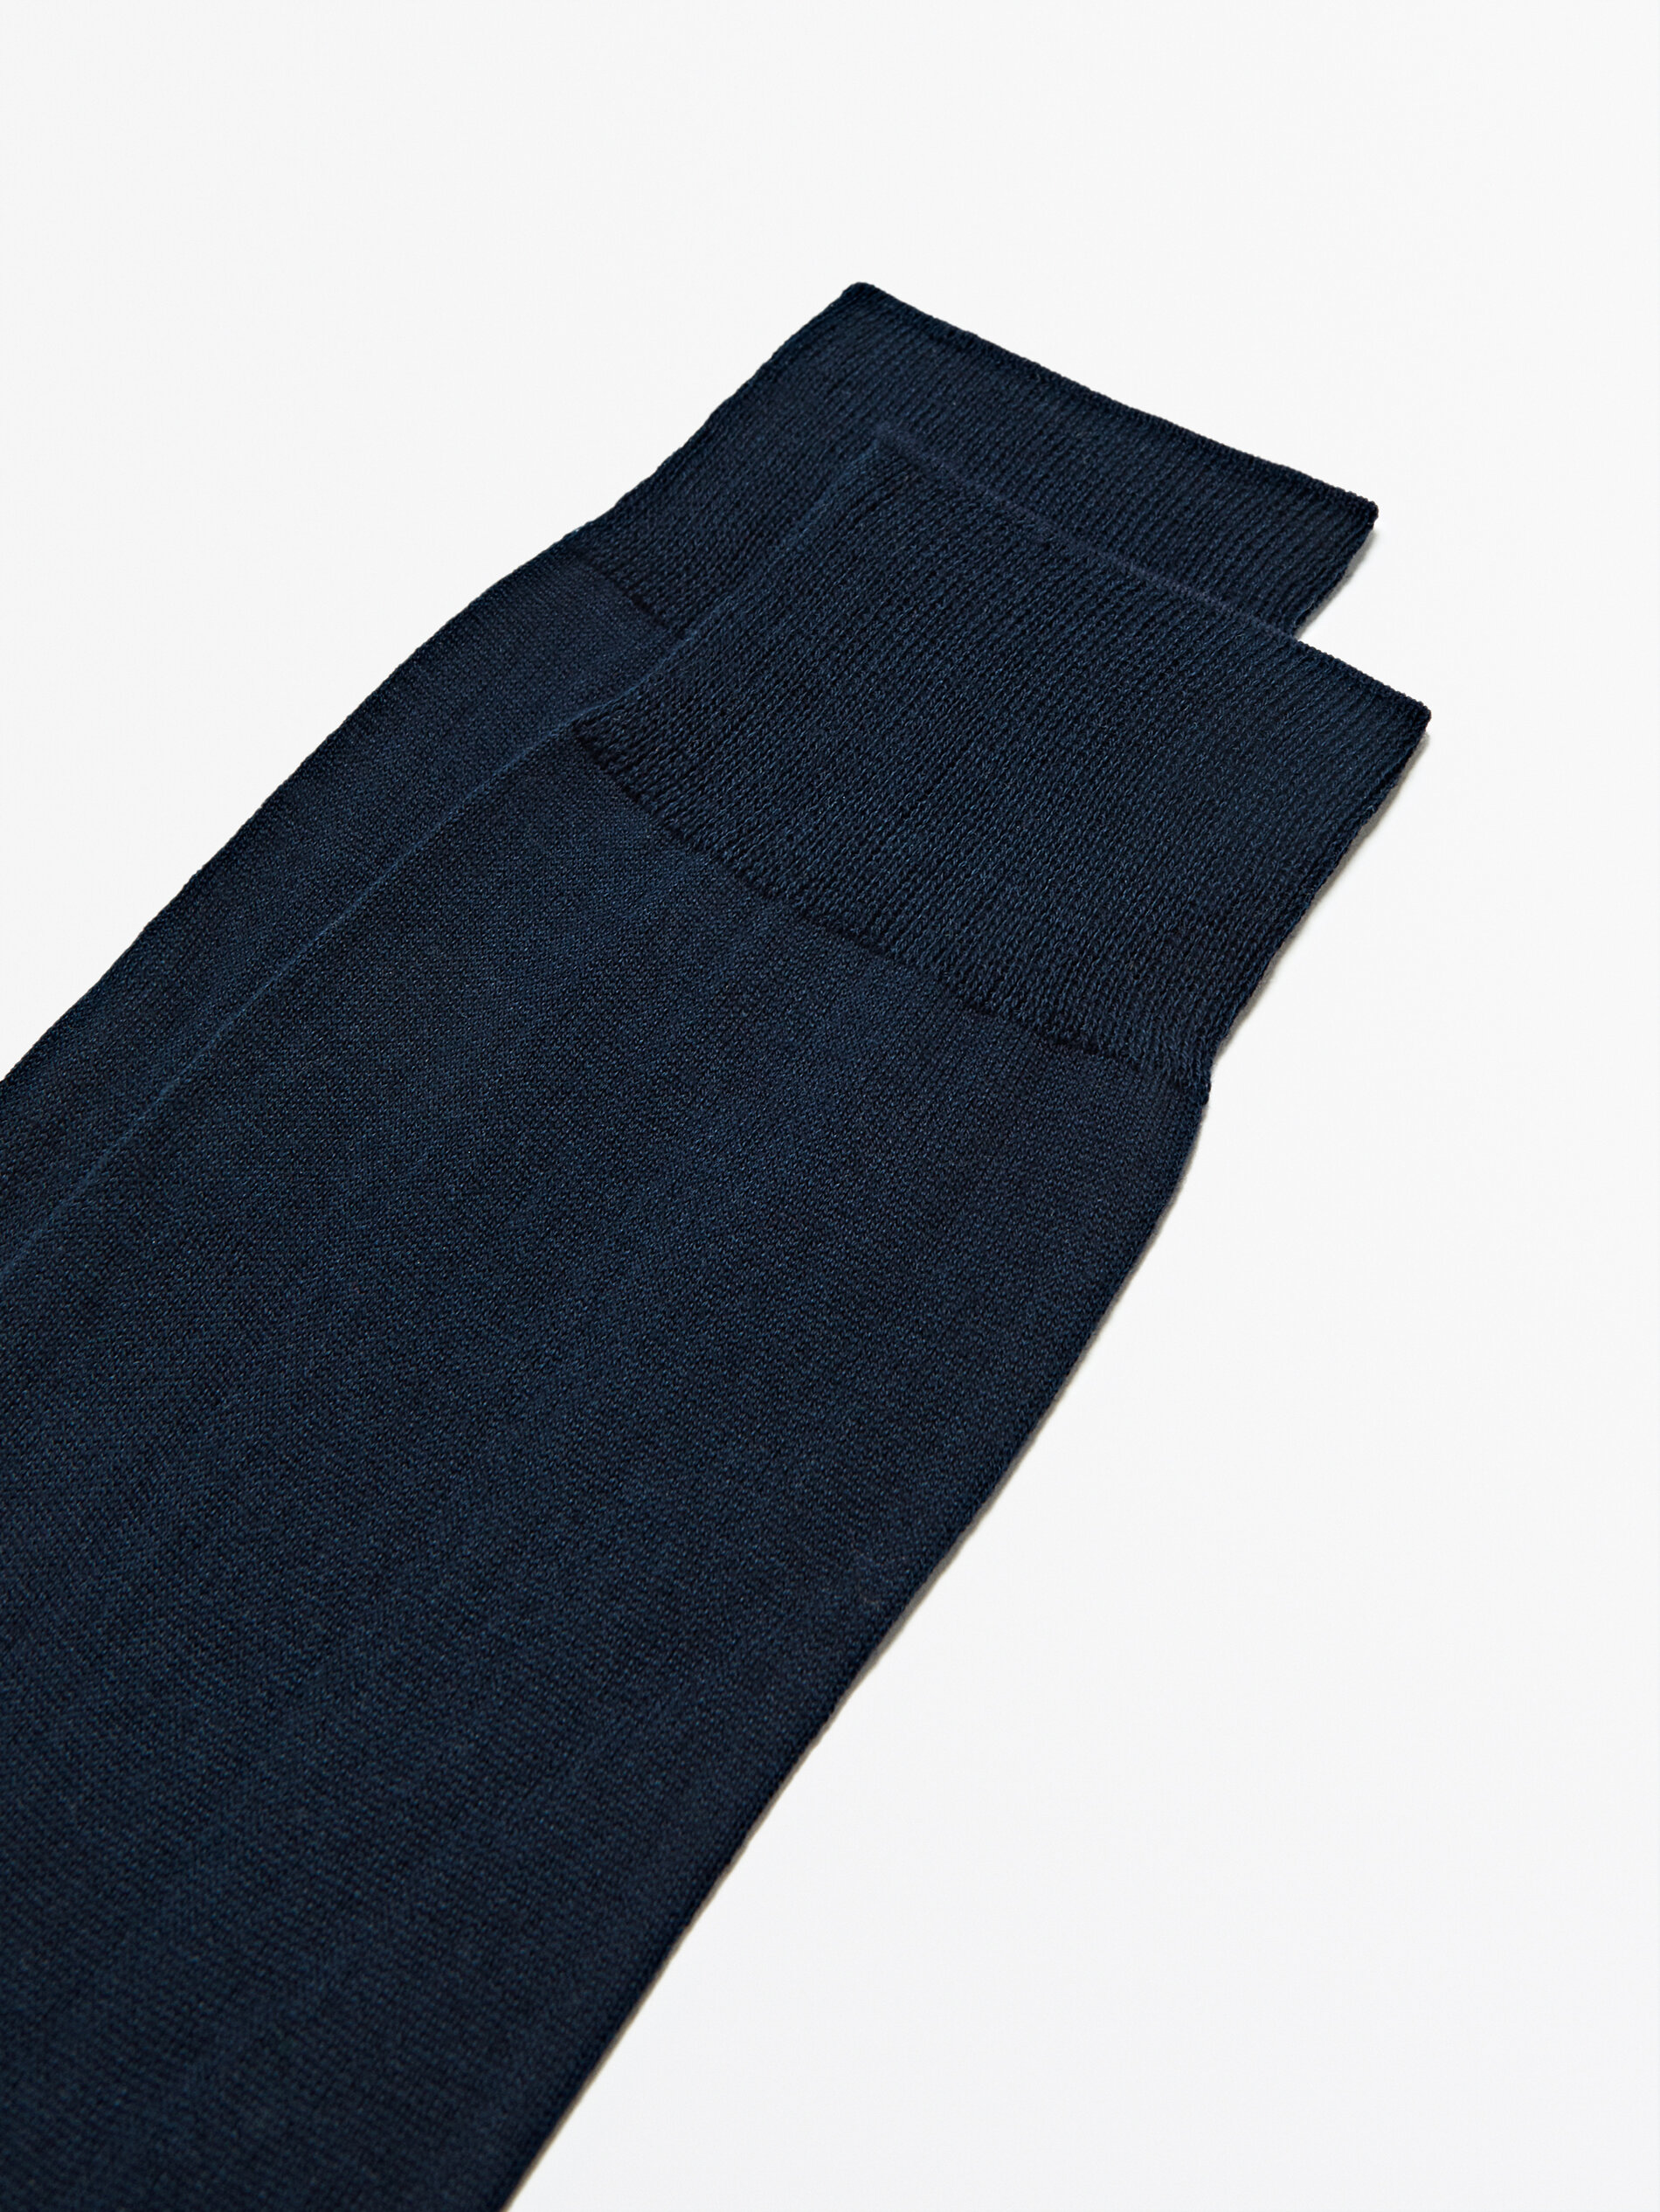 Massimo Dutti - Plain cotton socks